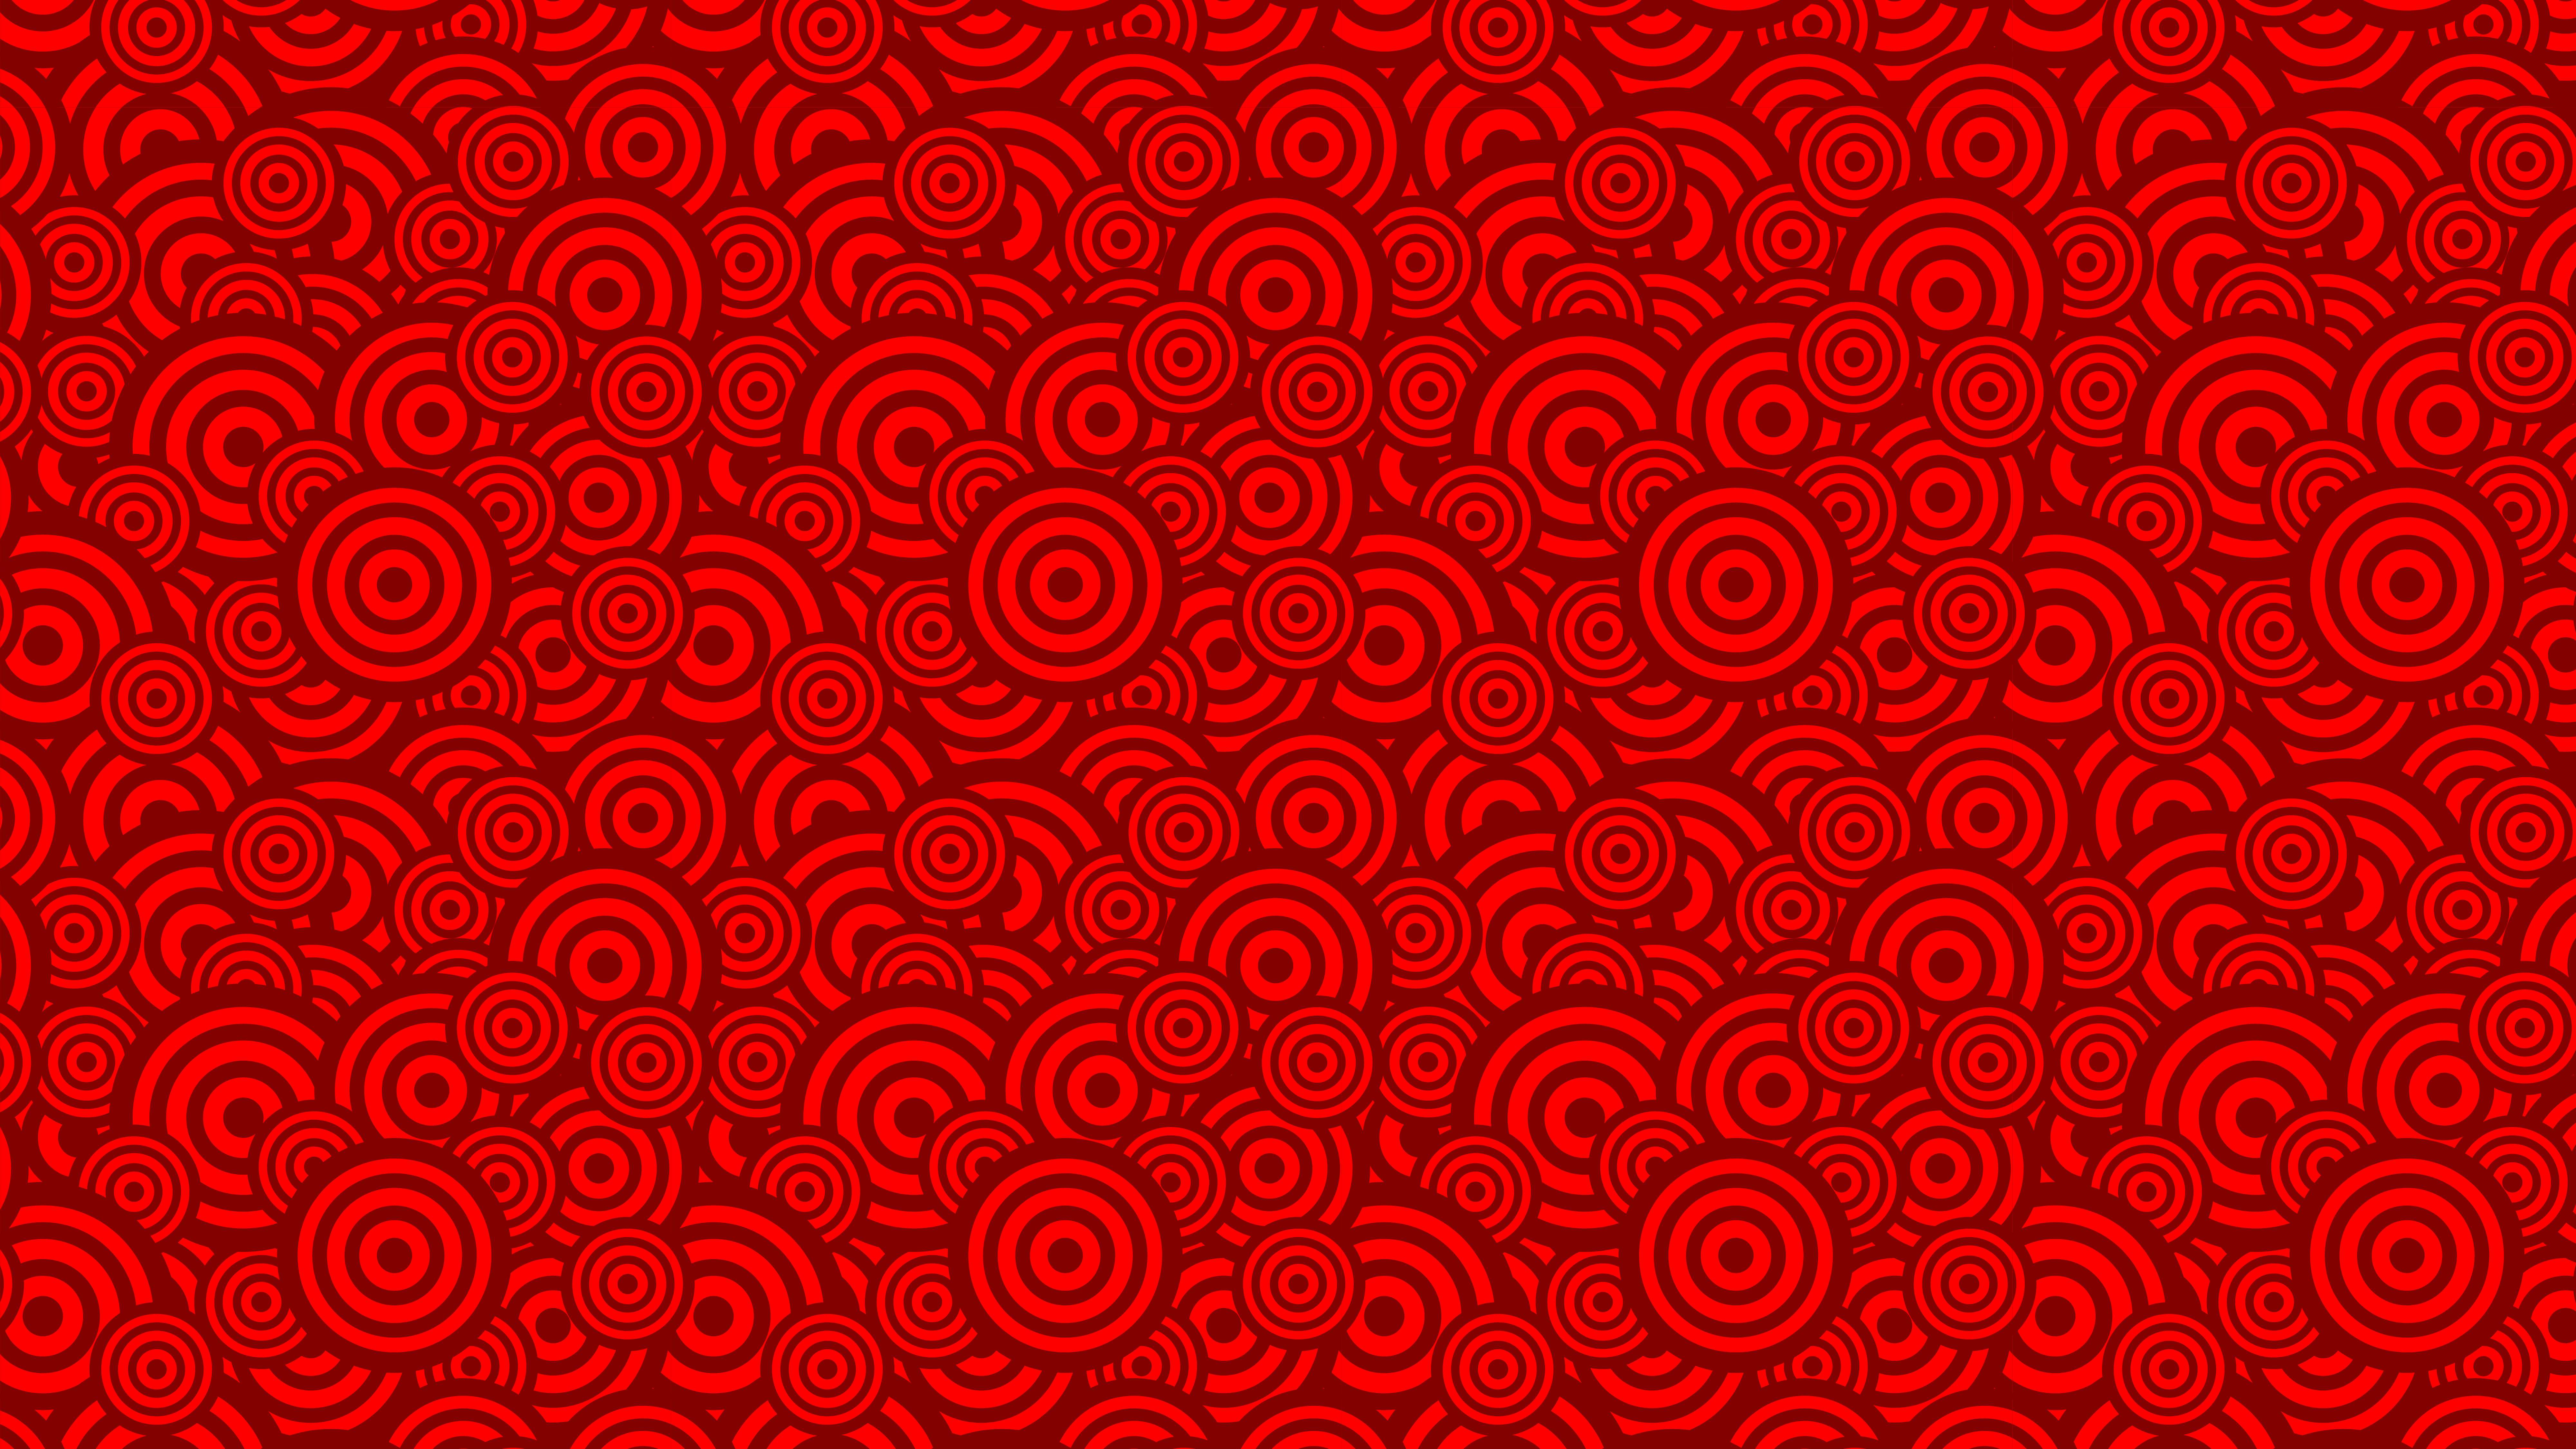 https://files.123freevectors.com/wp-content/original/102016-red-circle-pattern.jpg